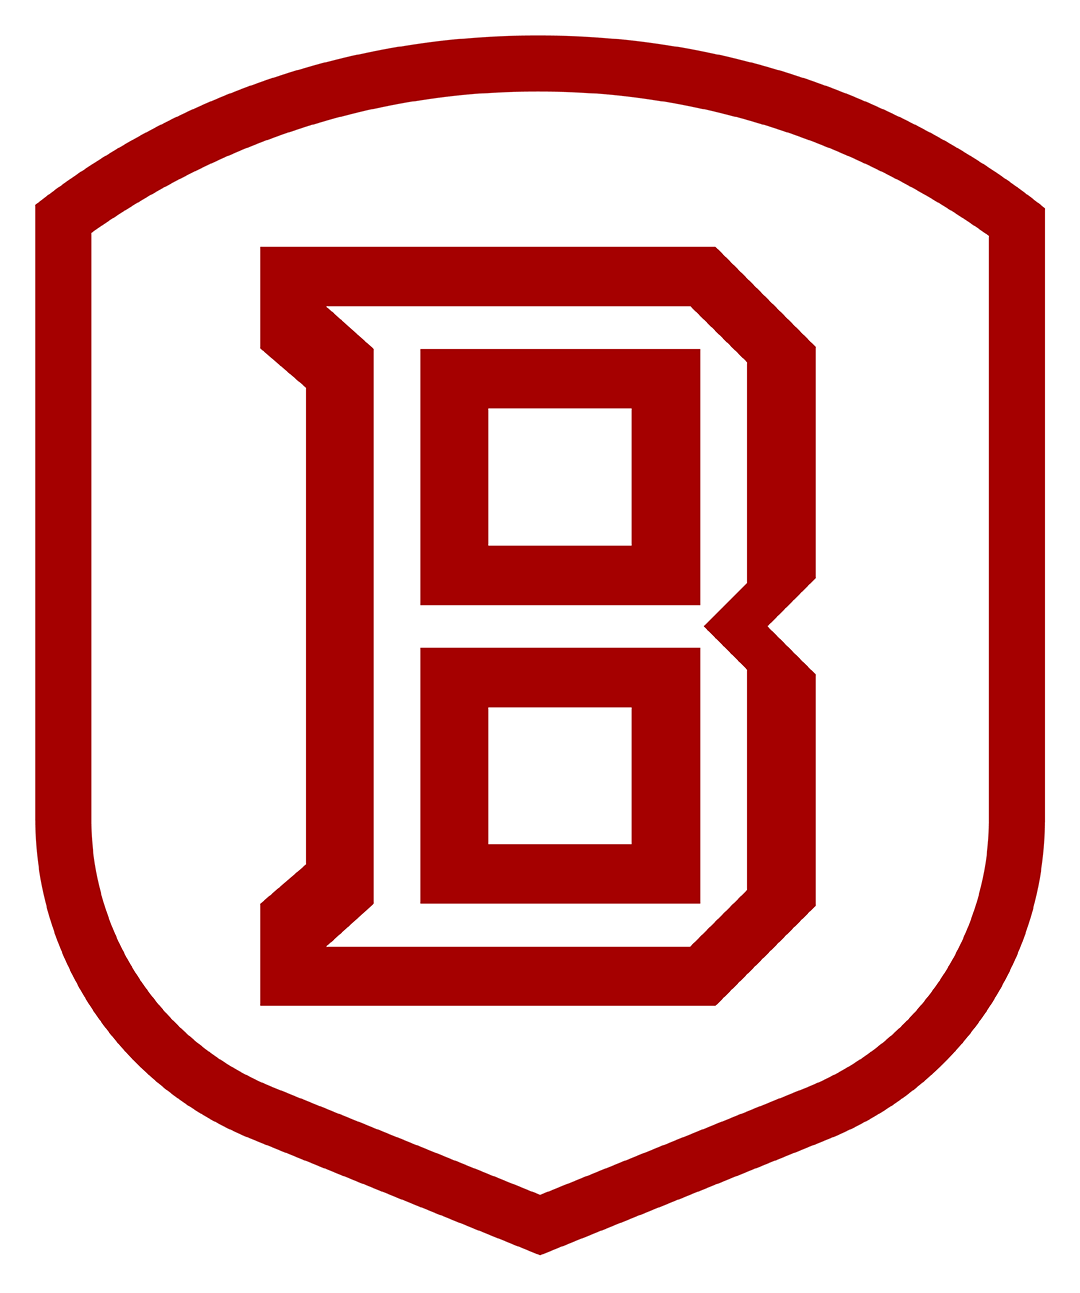 University Shield Logo - Logo Downloads - Bradley University